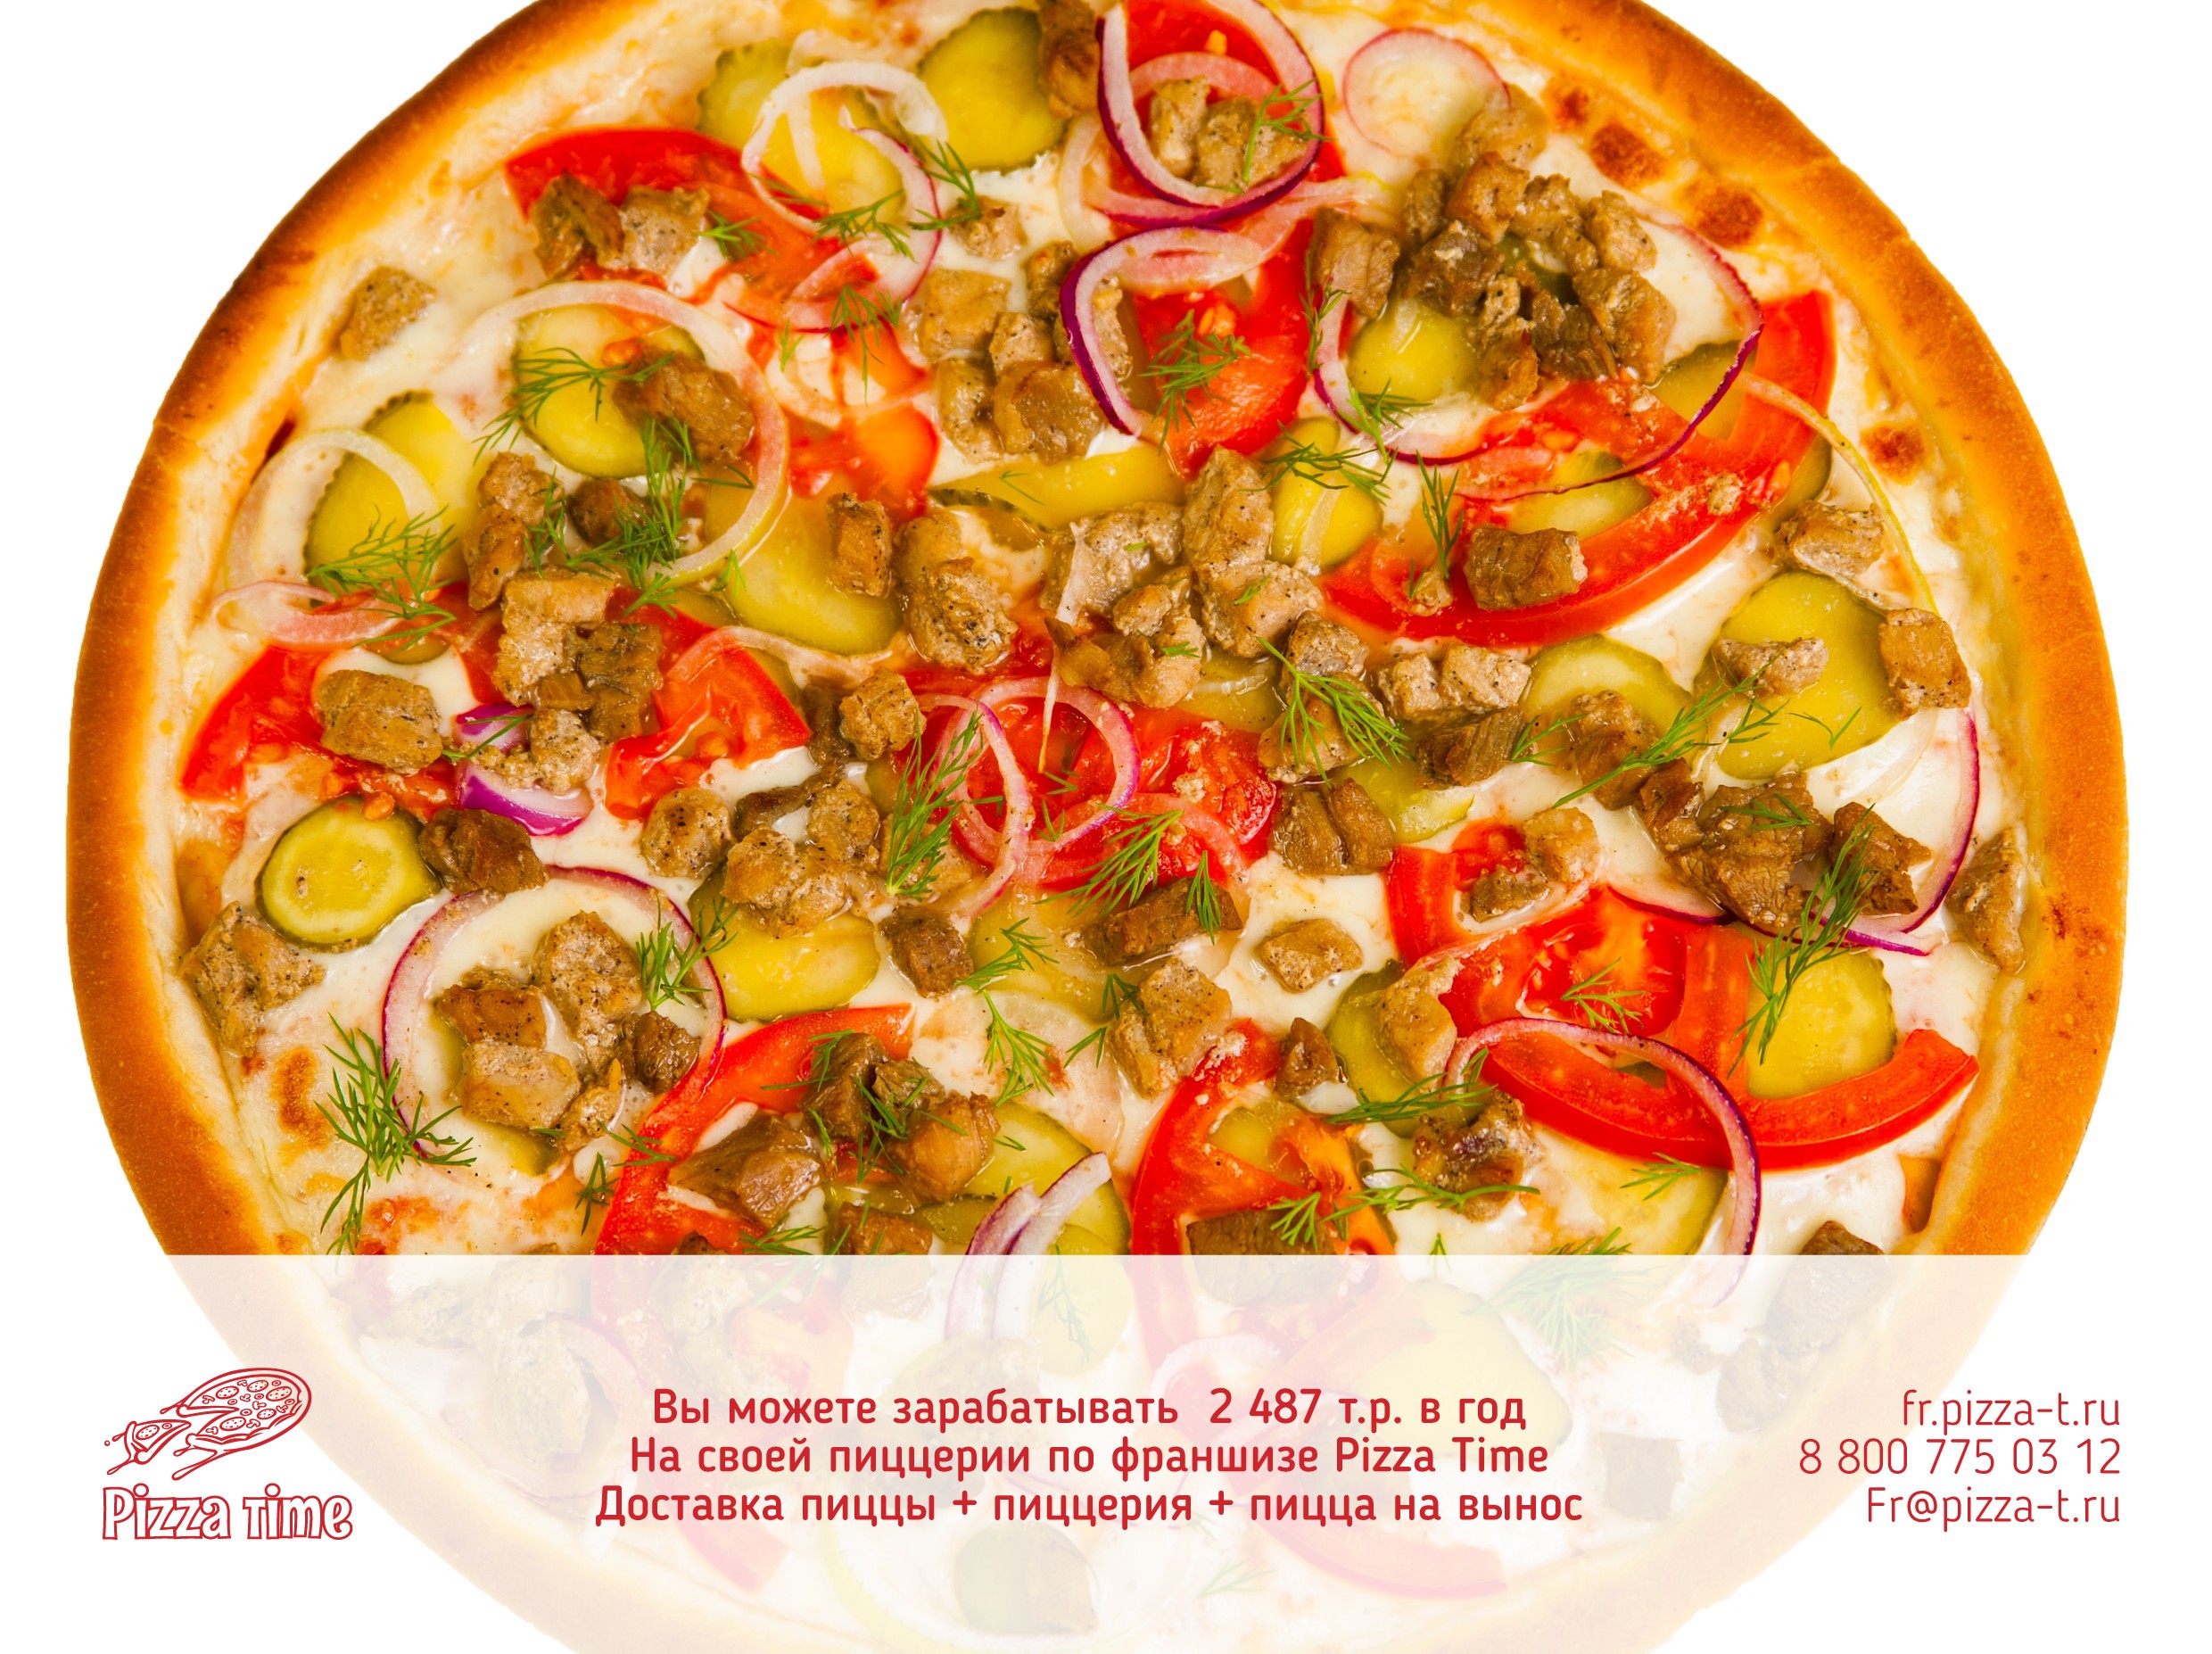 Франшиза пиццерии Pizza Time в городе Санкт-Петербург, фото 3, телефон продавца: +7 (800) 775-03-12